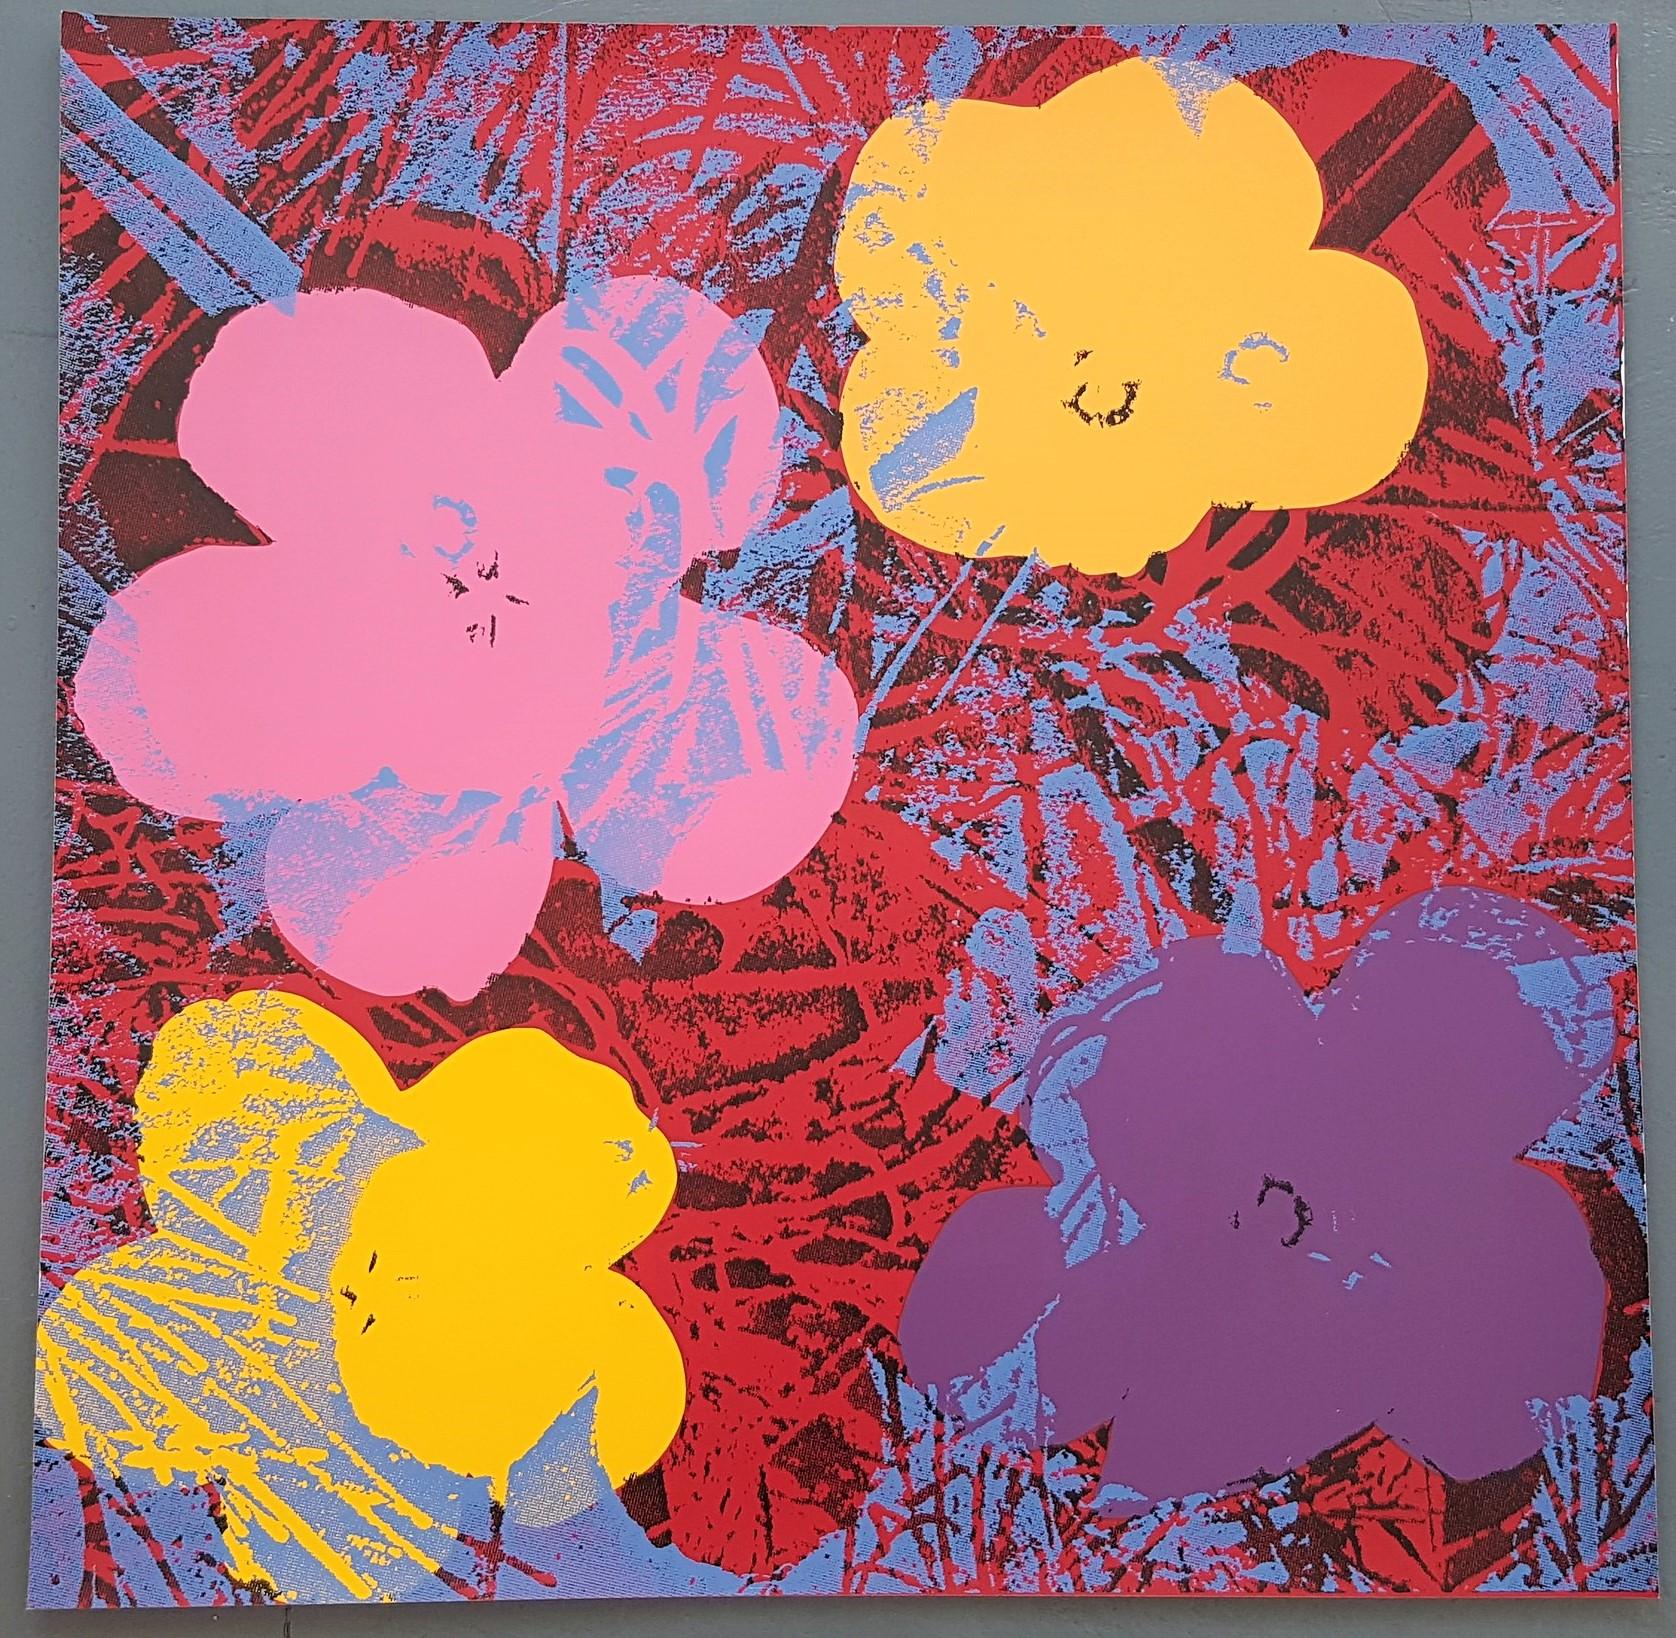 Blumen (Rosa-, Gelb-, Lila-Töne, Pop-Art) (~70% AUS LISTENPREIS, BEFRISTET) – Print von Jurgen Kuhl 